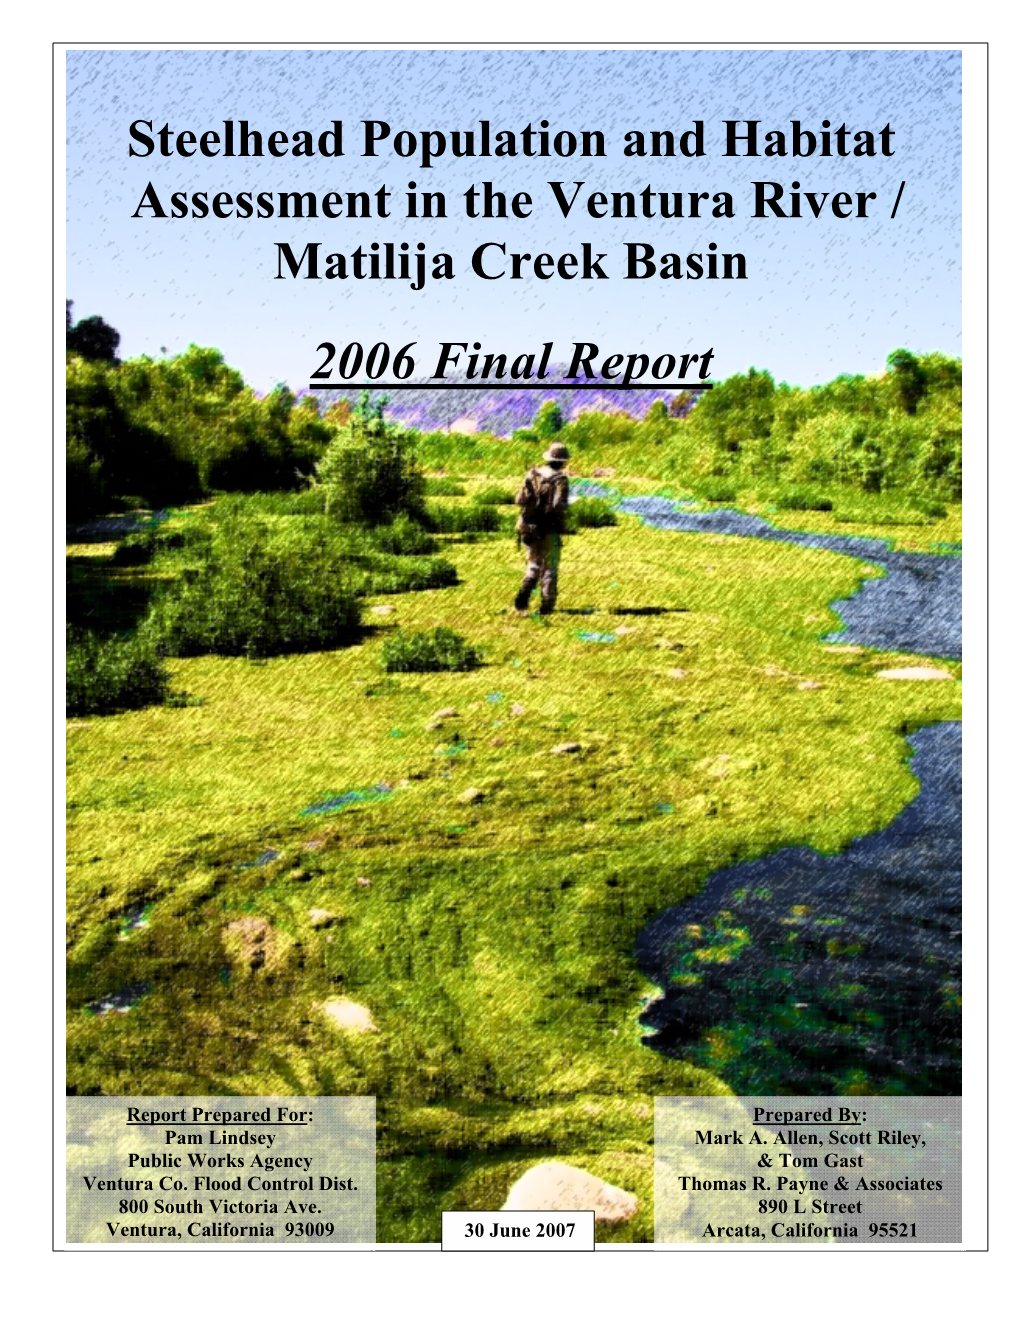 Steelhead Population and Habitat Assessment in the Ventura River / Matilija Creek Basin